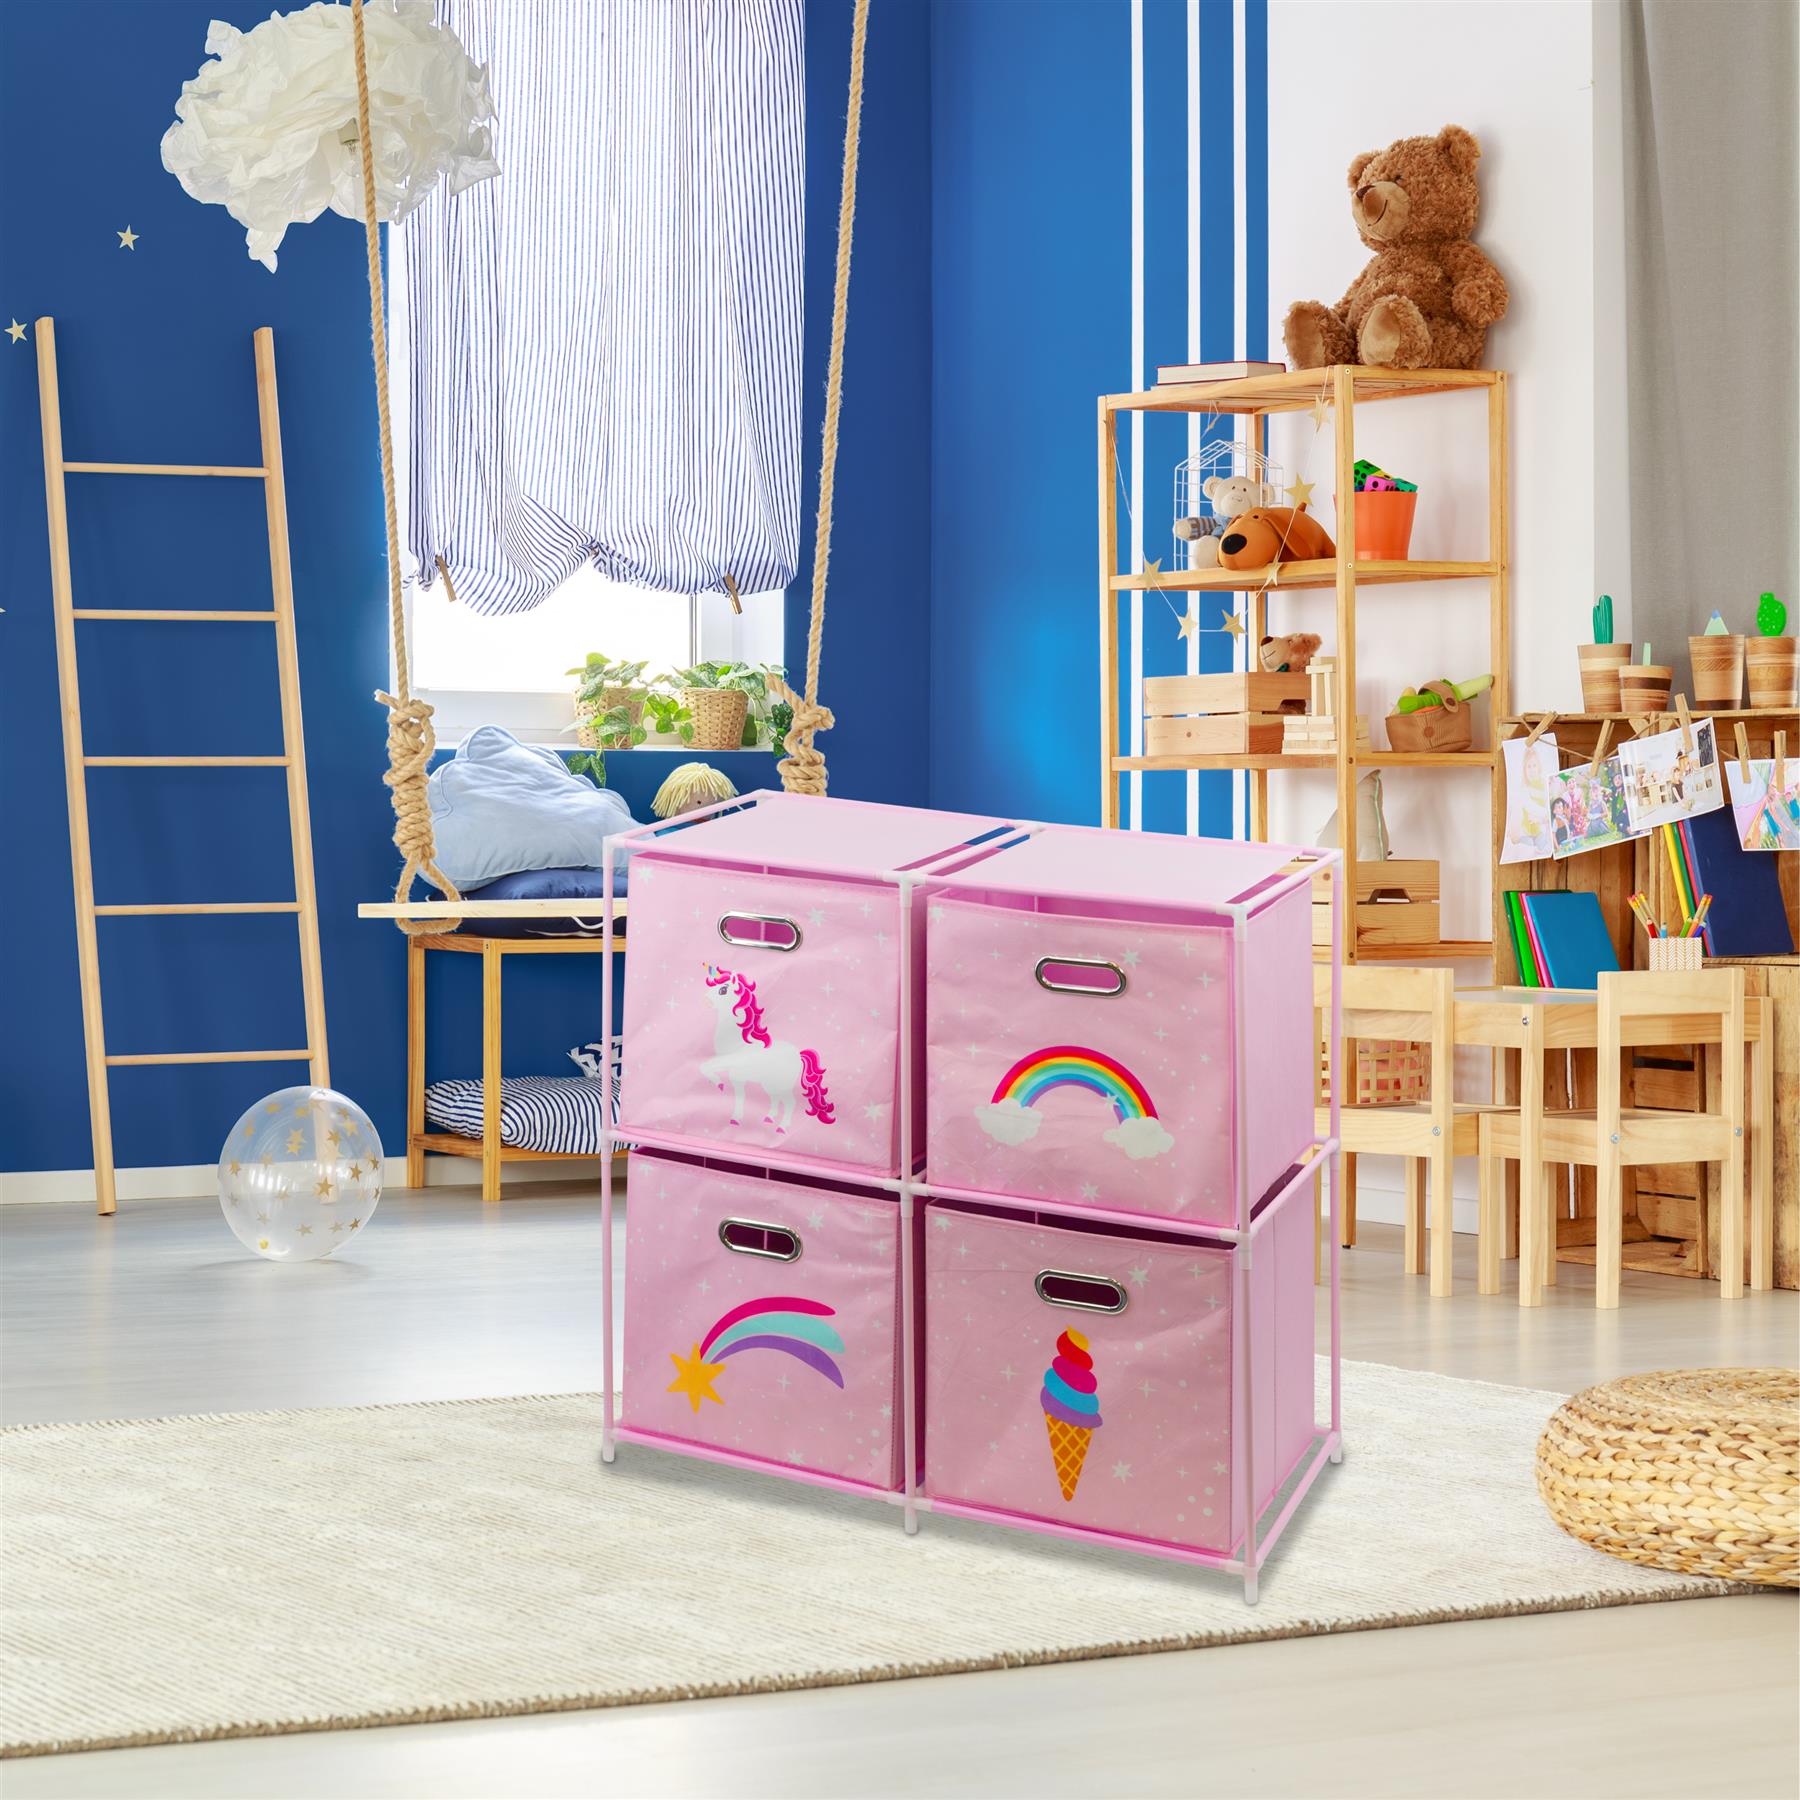 Kids Unicorn Design Storage Cubes by The Magic Toy Shop - The Magic Toy Shop